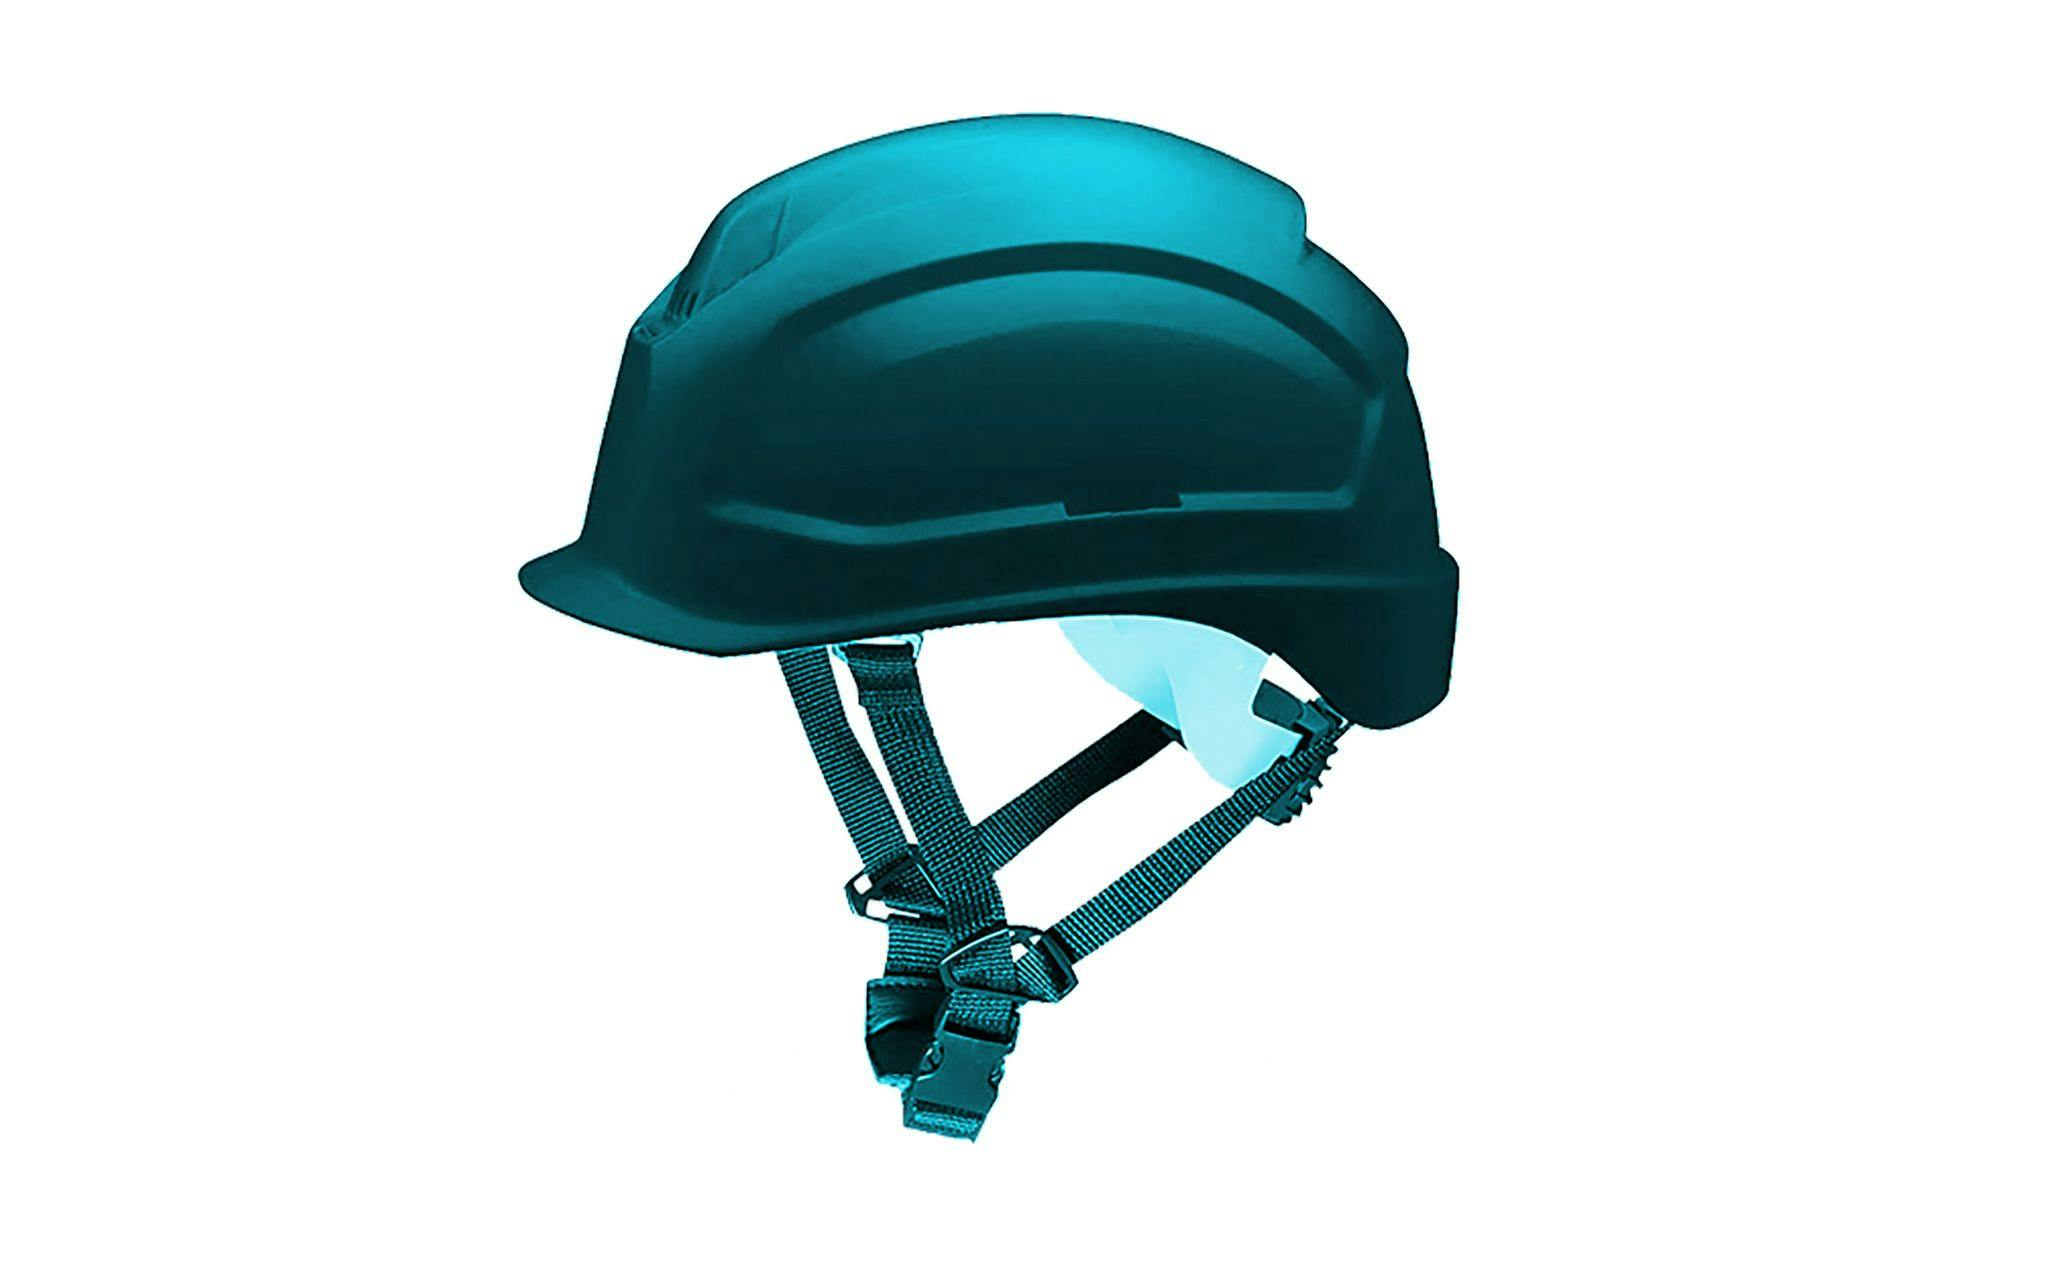 Illustration of a safety helmet